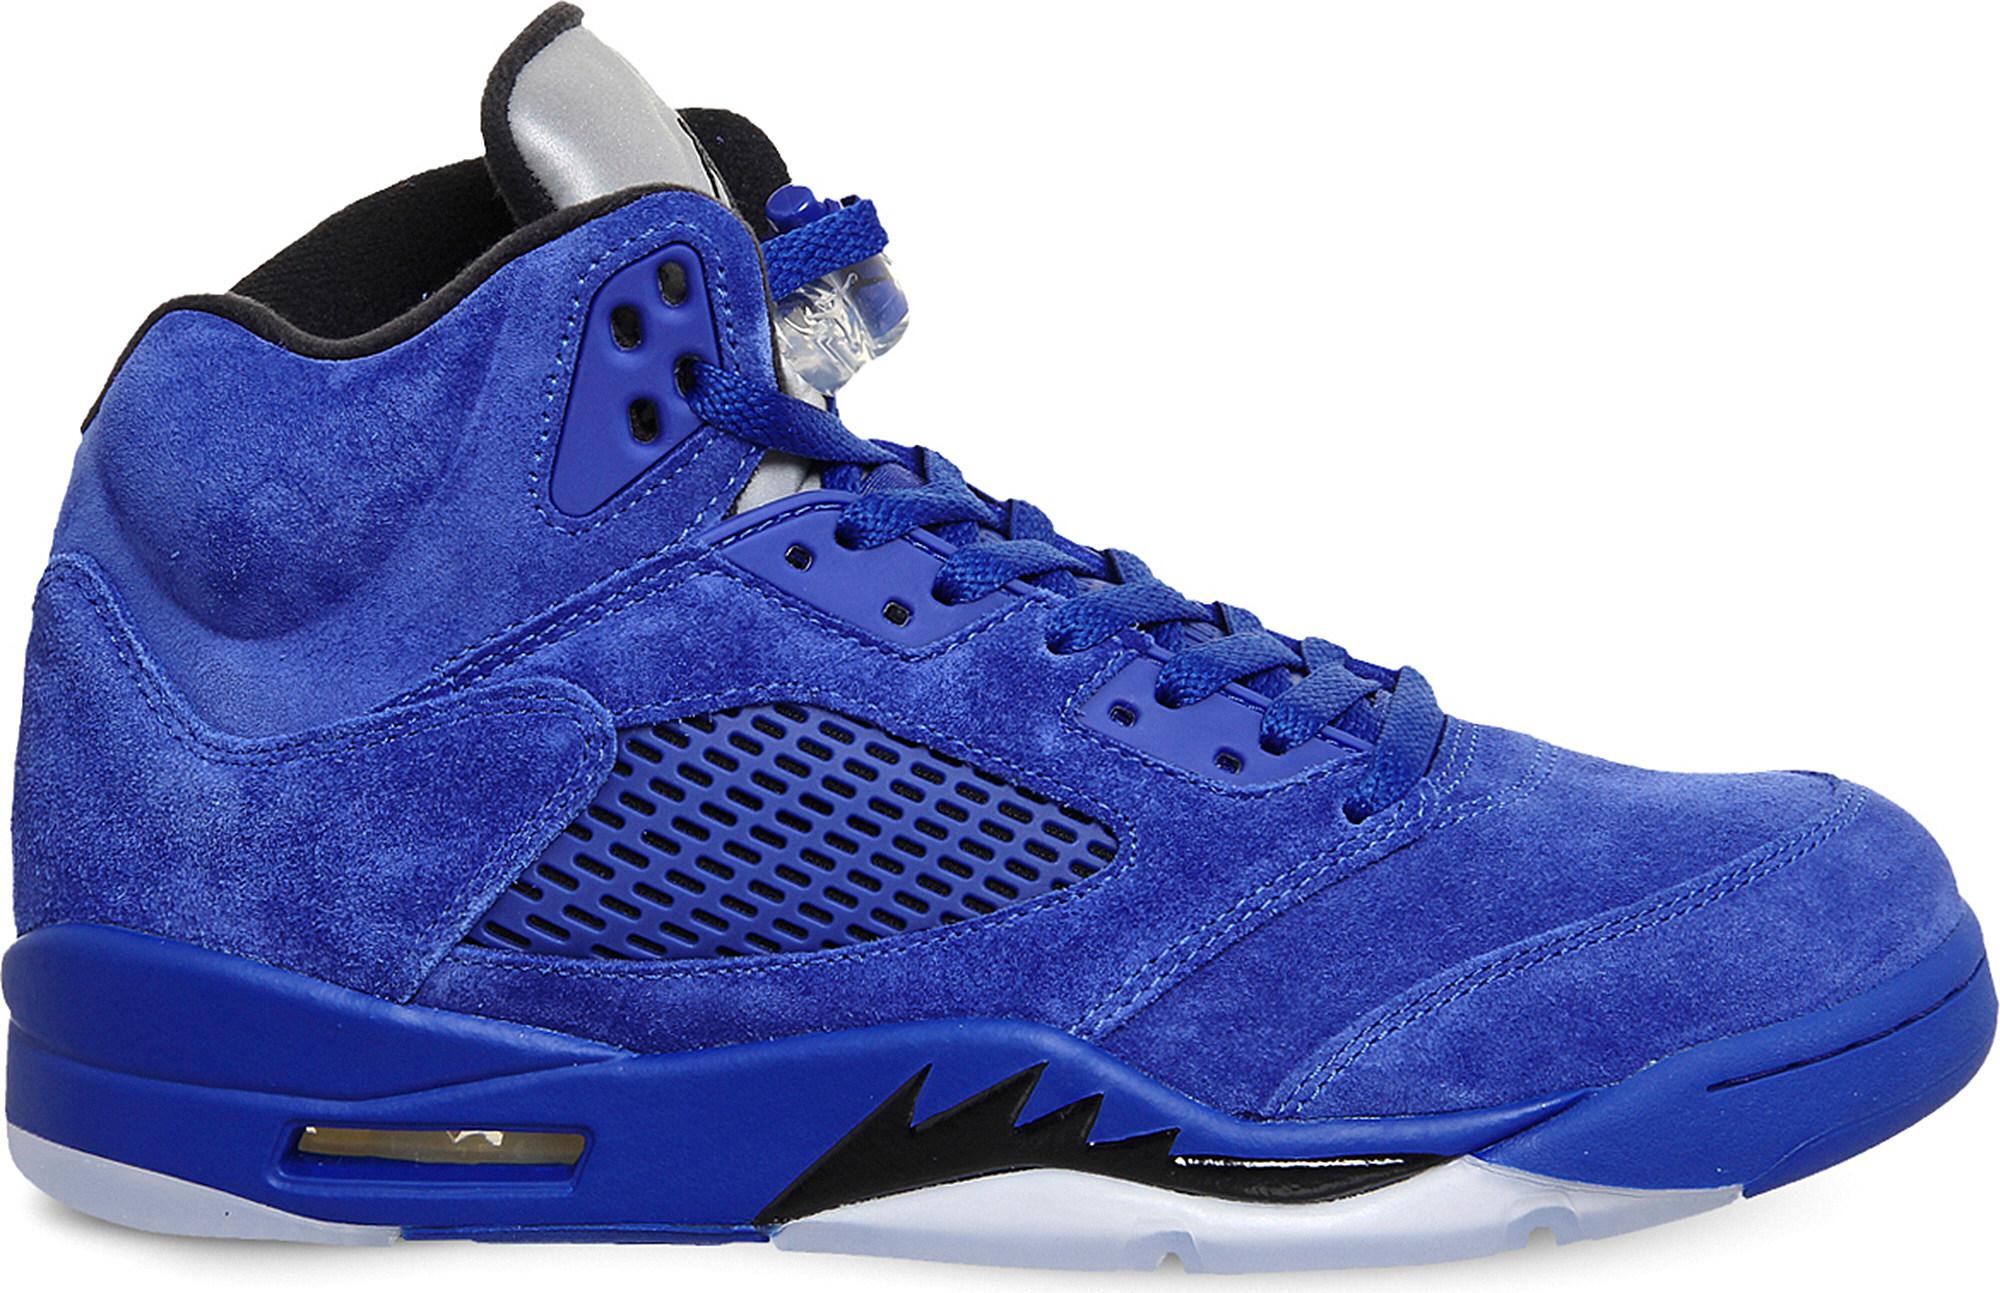 Lyst - Nike Air Jordan 5 Retro Suede Trainers in Blue for Men